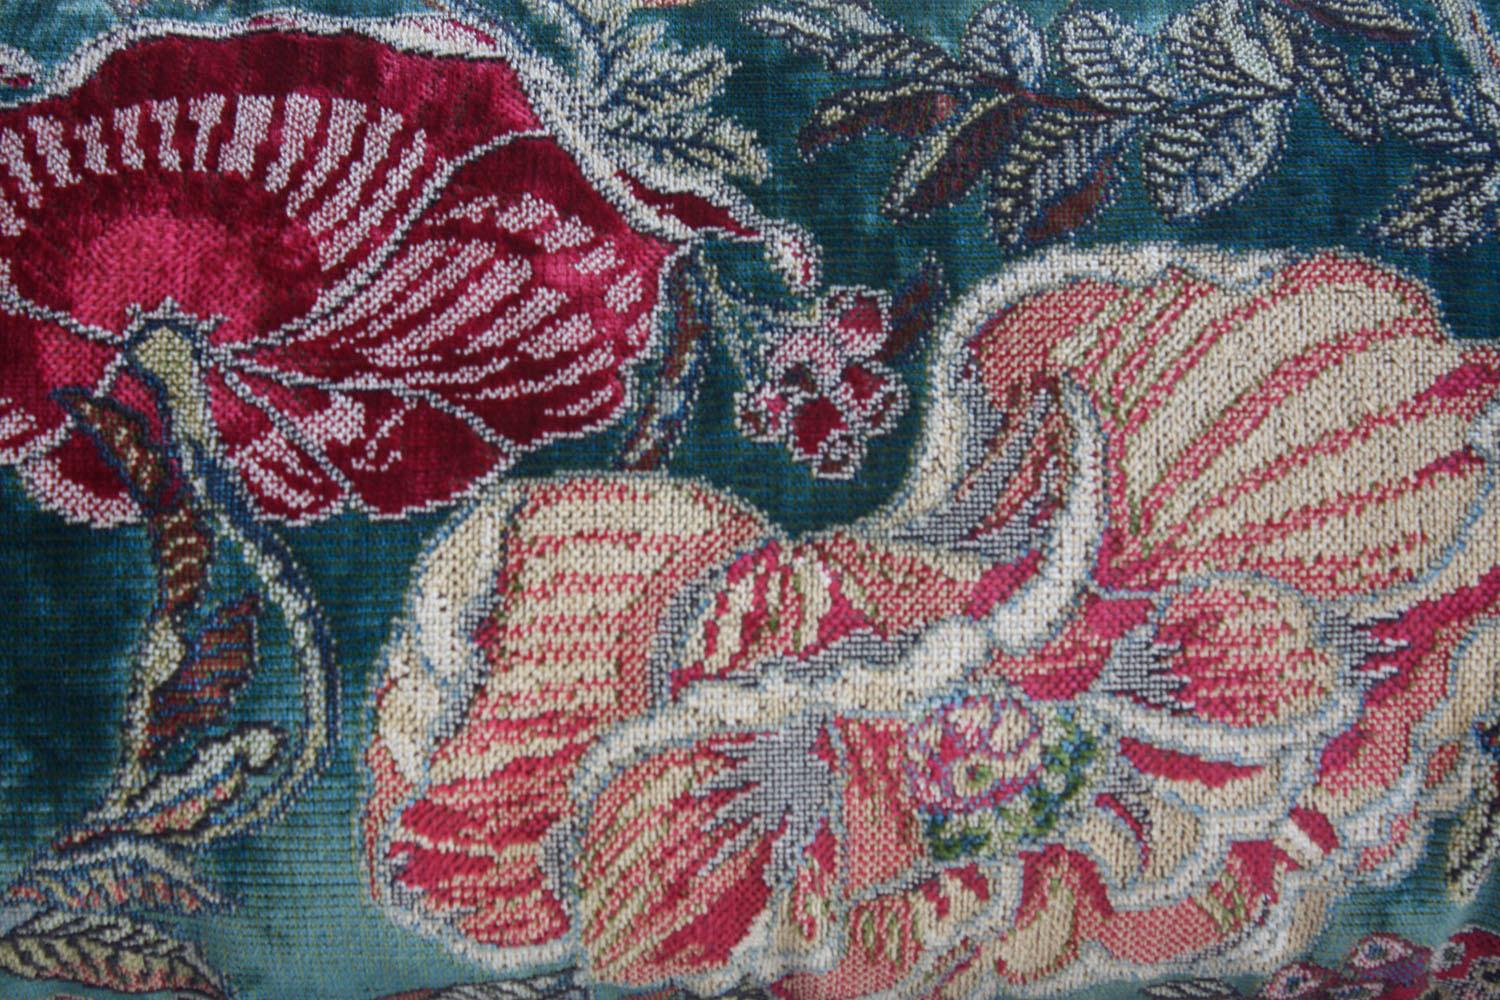 Fabric 1910s Vintage Botanical Velvet Pillows: Charm & Comfort for Any Home For Sale